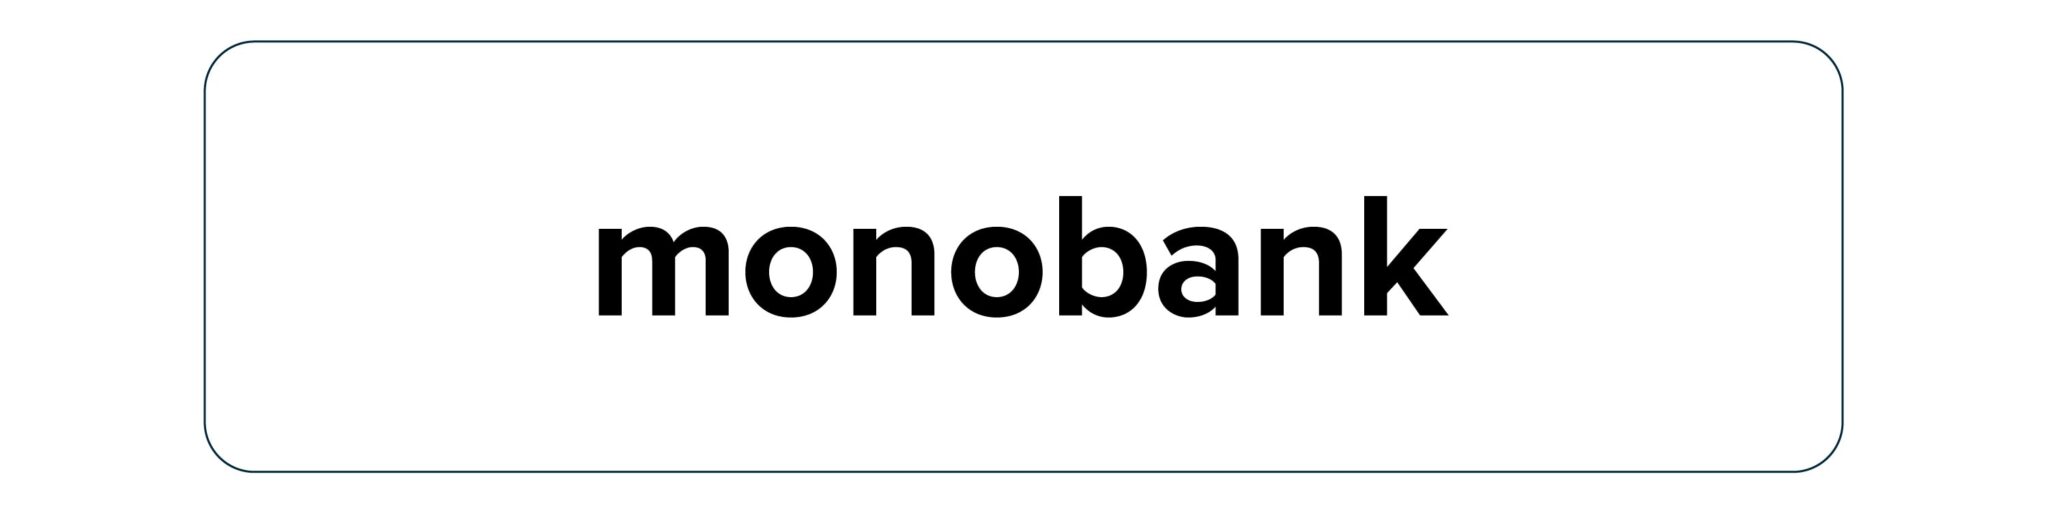 Top 3 Mobile Banking Apps: Monobank